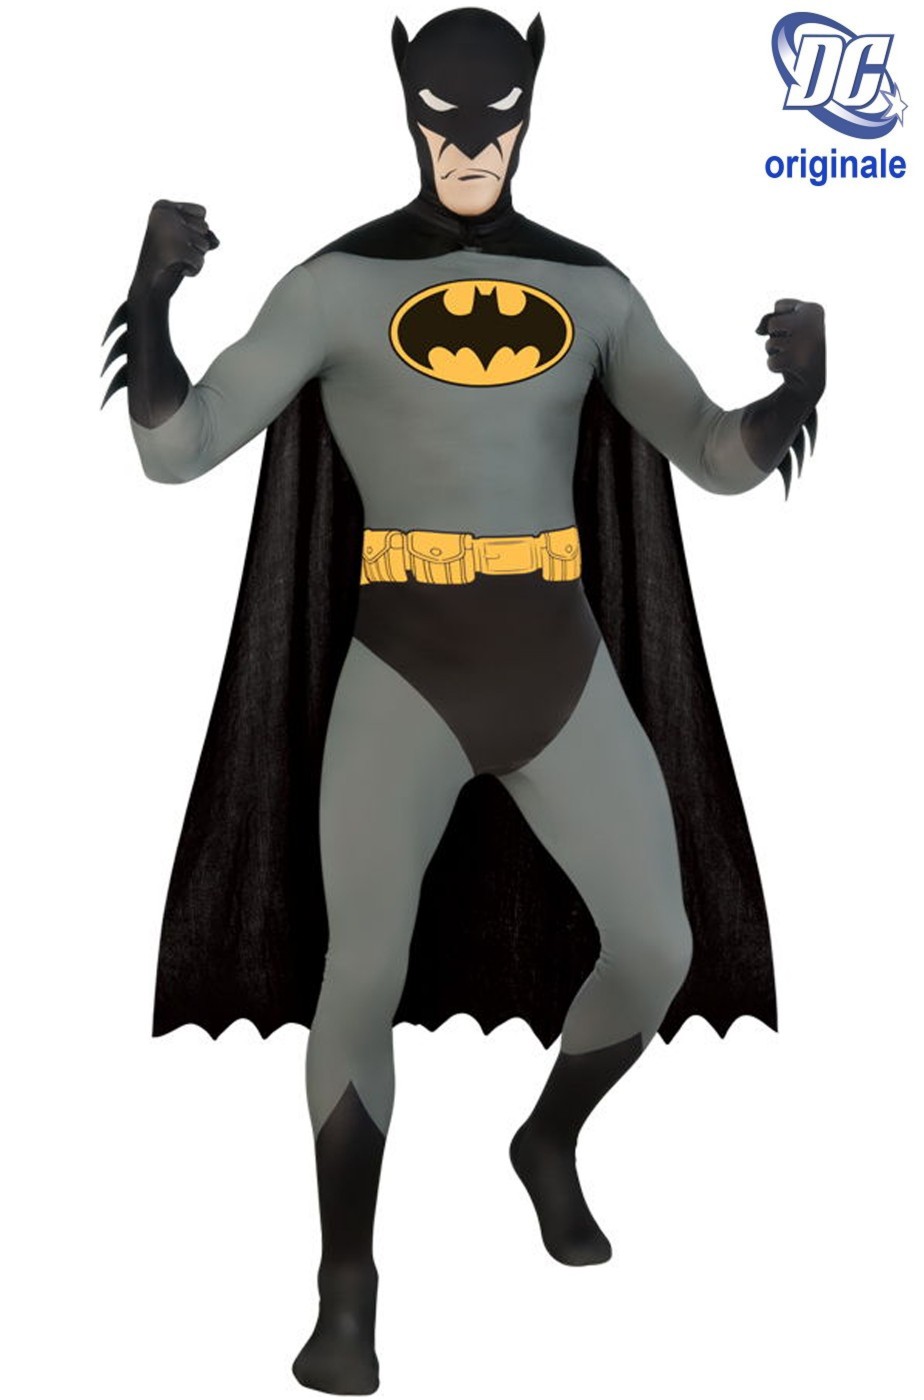 Costume Batman 2nd skin. Tuta aderente. Si beve attraverso la maschera